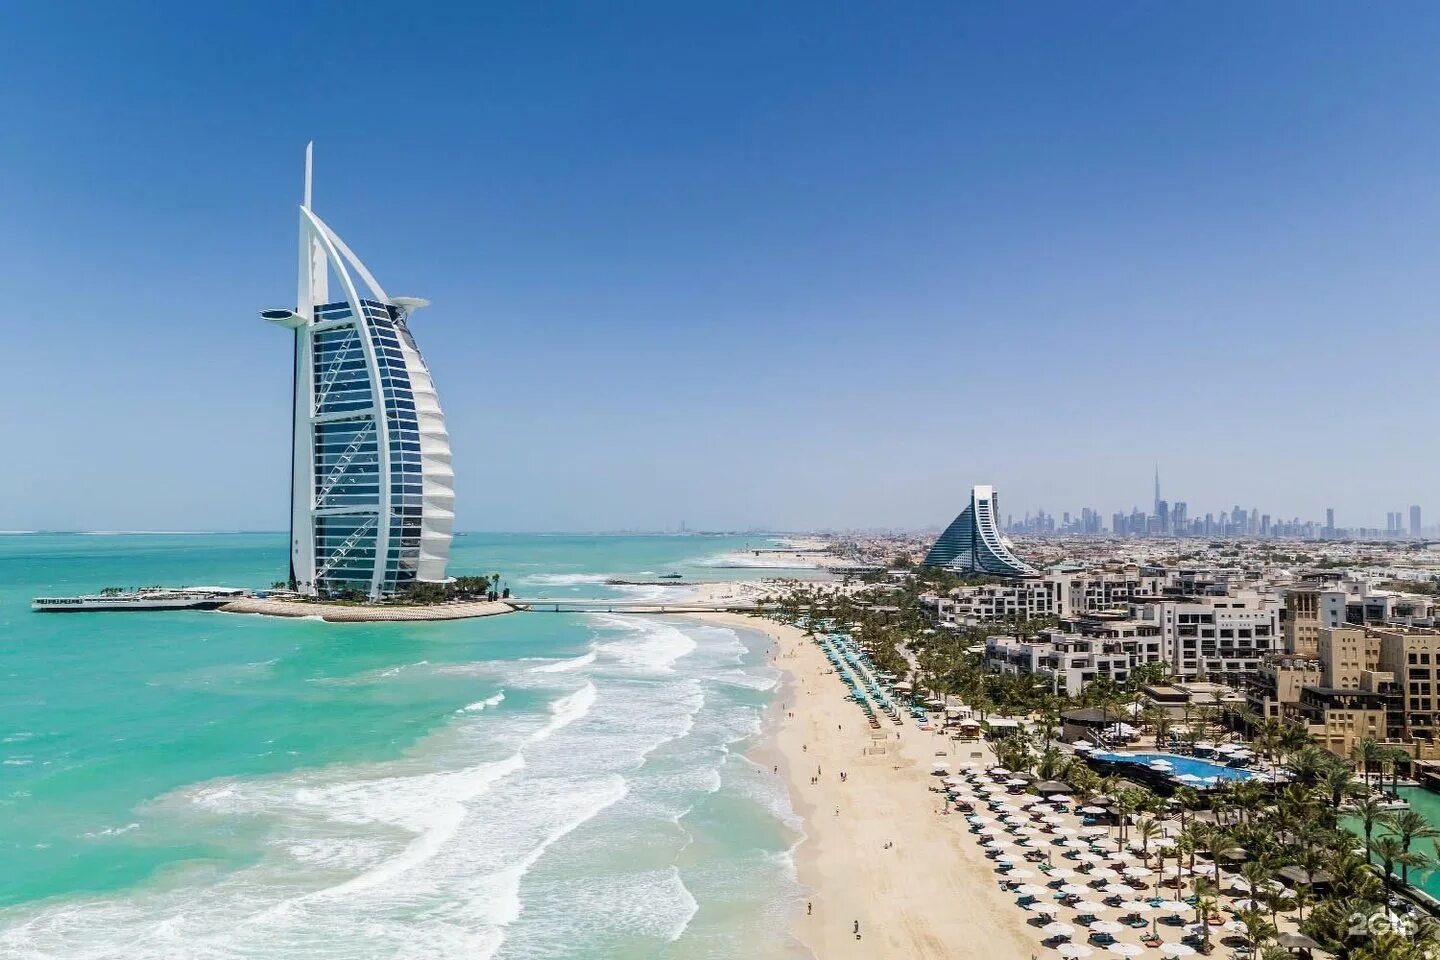 Дубай Джумейра Бич. Отель в Дубае Jumeirah Beach Hotel. Пляж Джумейра Бич в Дубае. Пляж Бурдж Аль араб Дубай. Дубай в мае отзывы